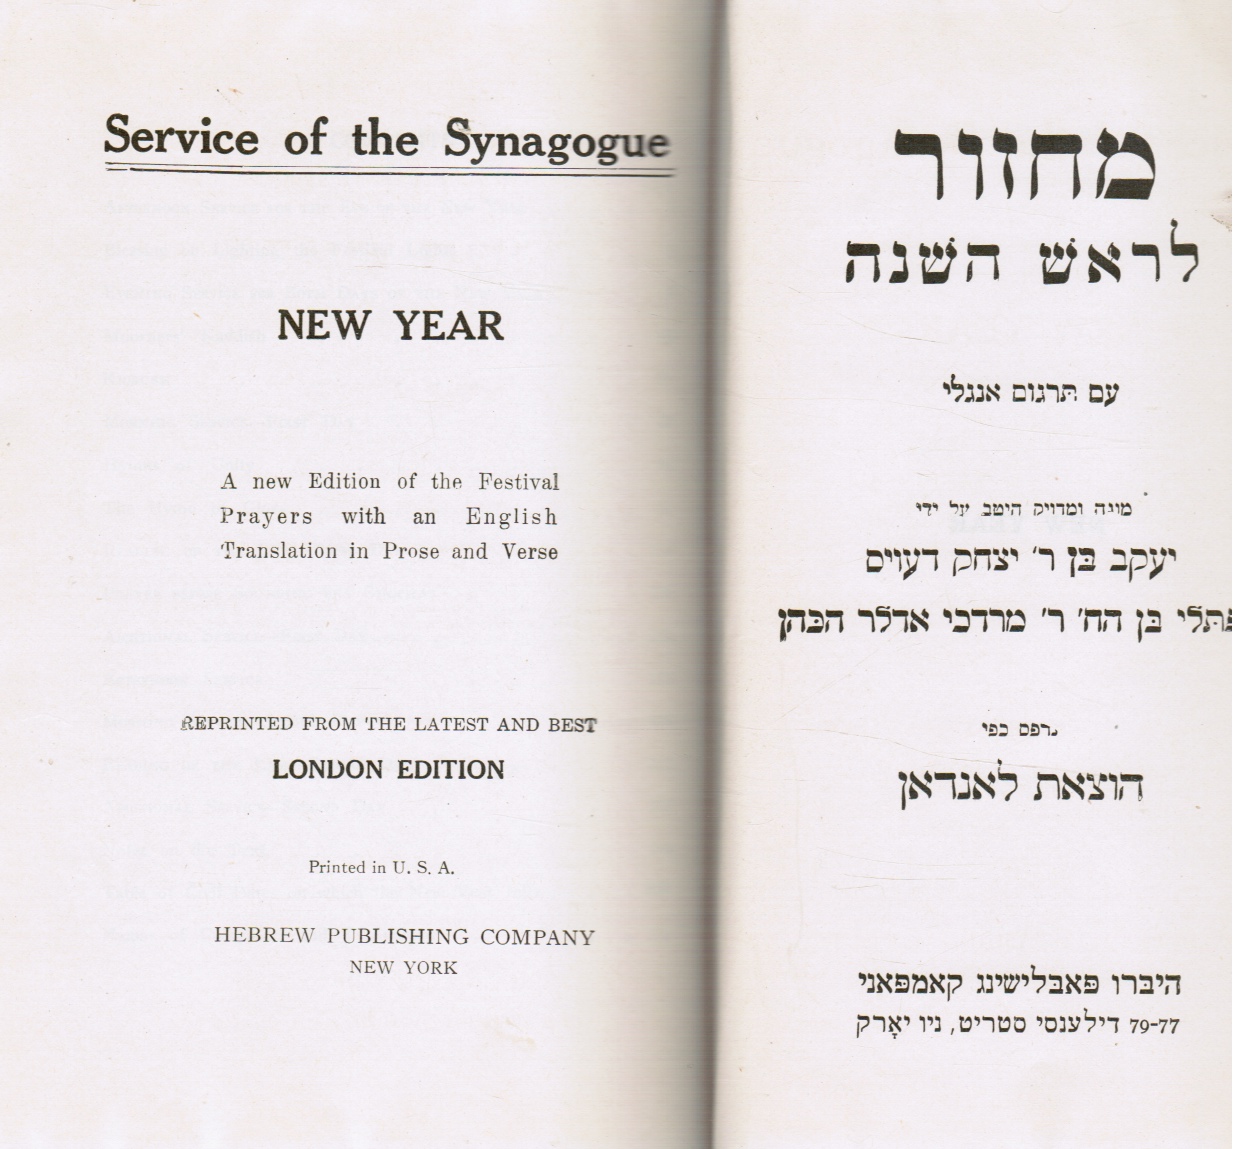 ARTHUR DAVIS, TRANSLATOR; HERBERT ADLER, EDITOR - Service of the Synagogue: New Year